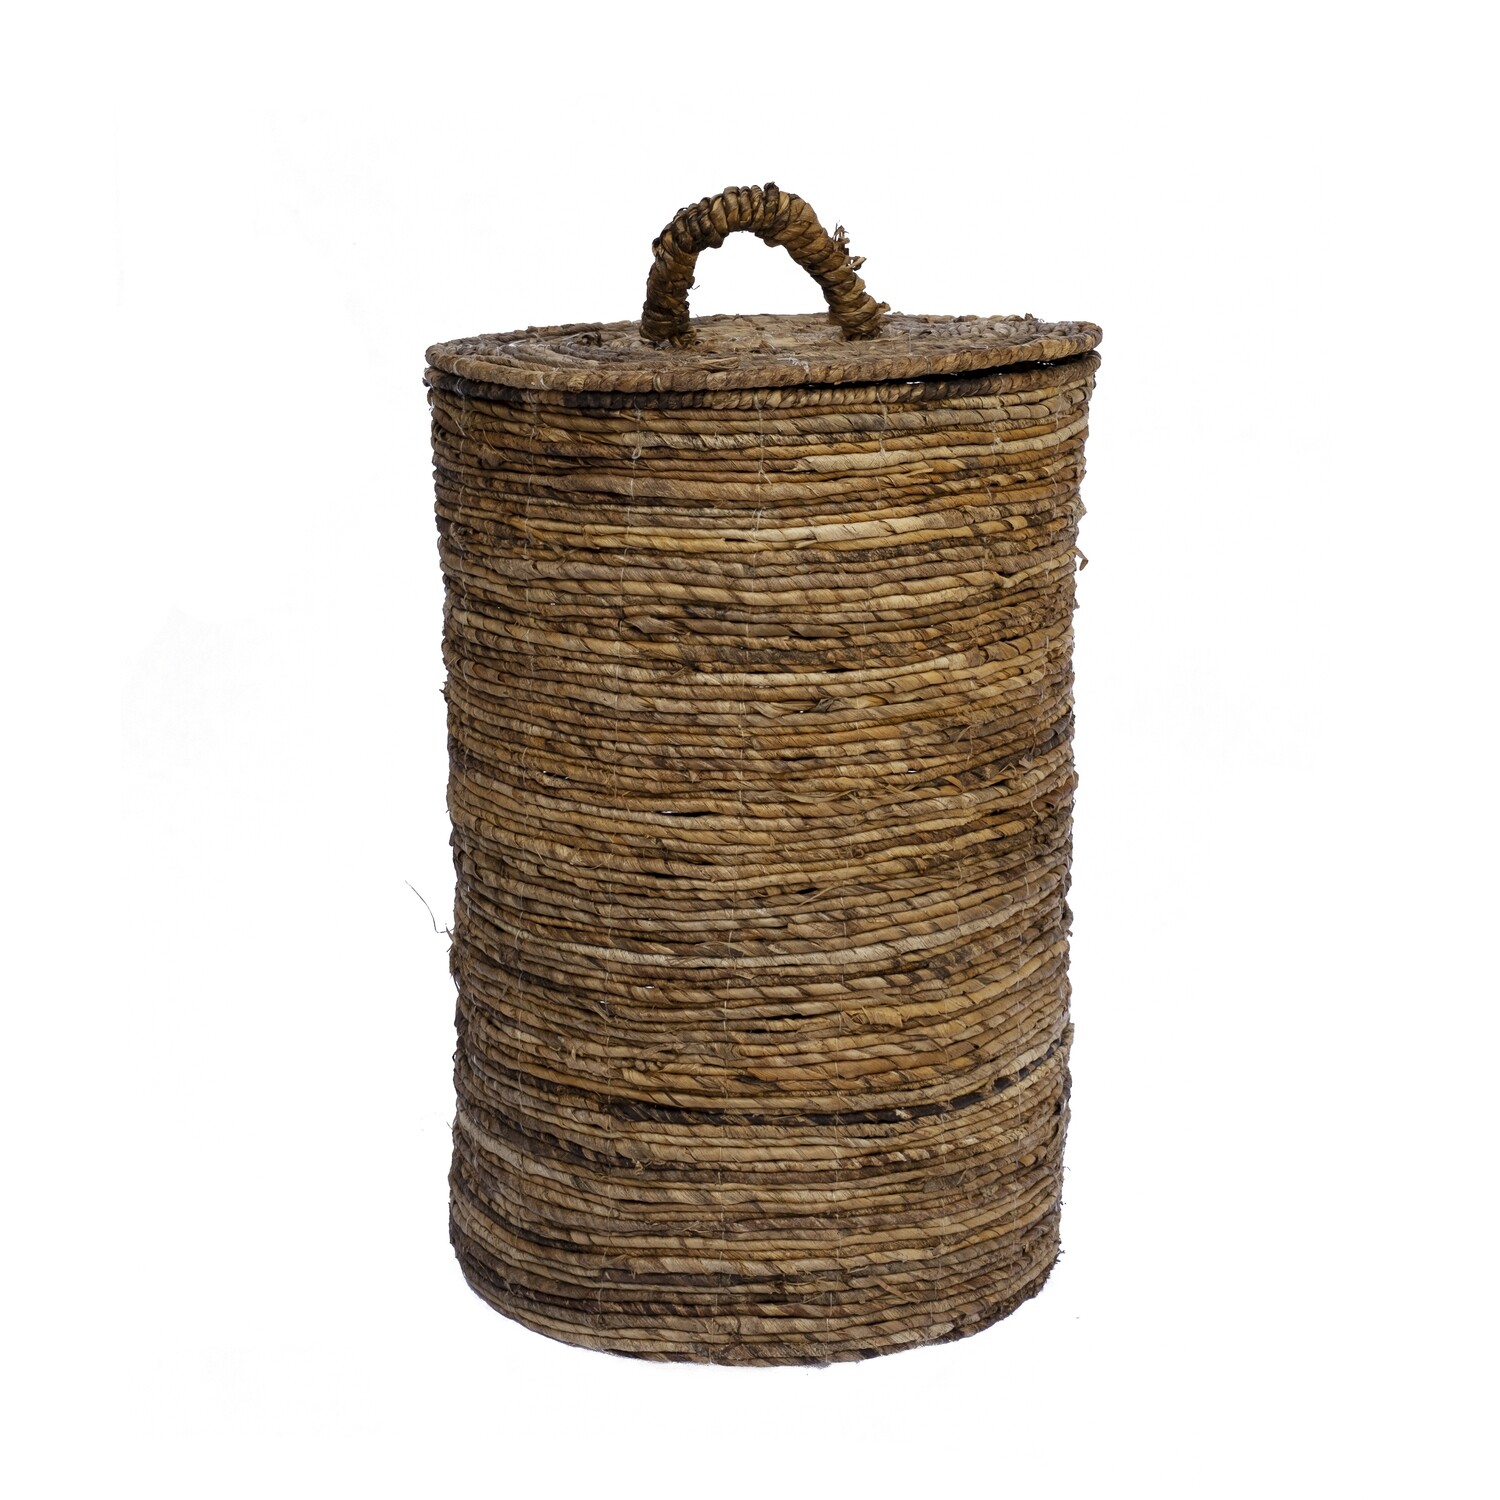 Basket 44 (55cm)